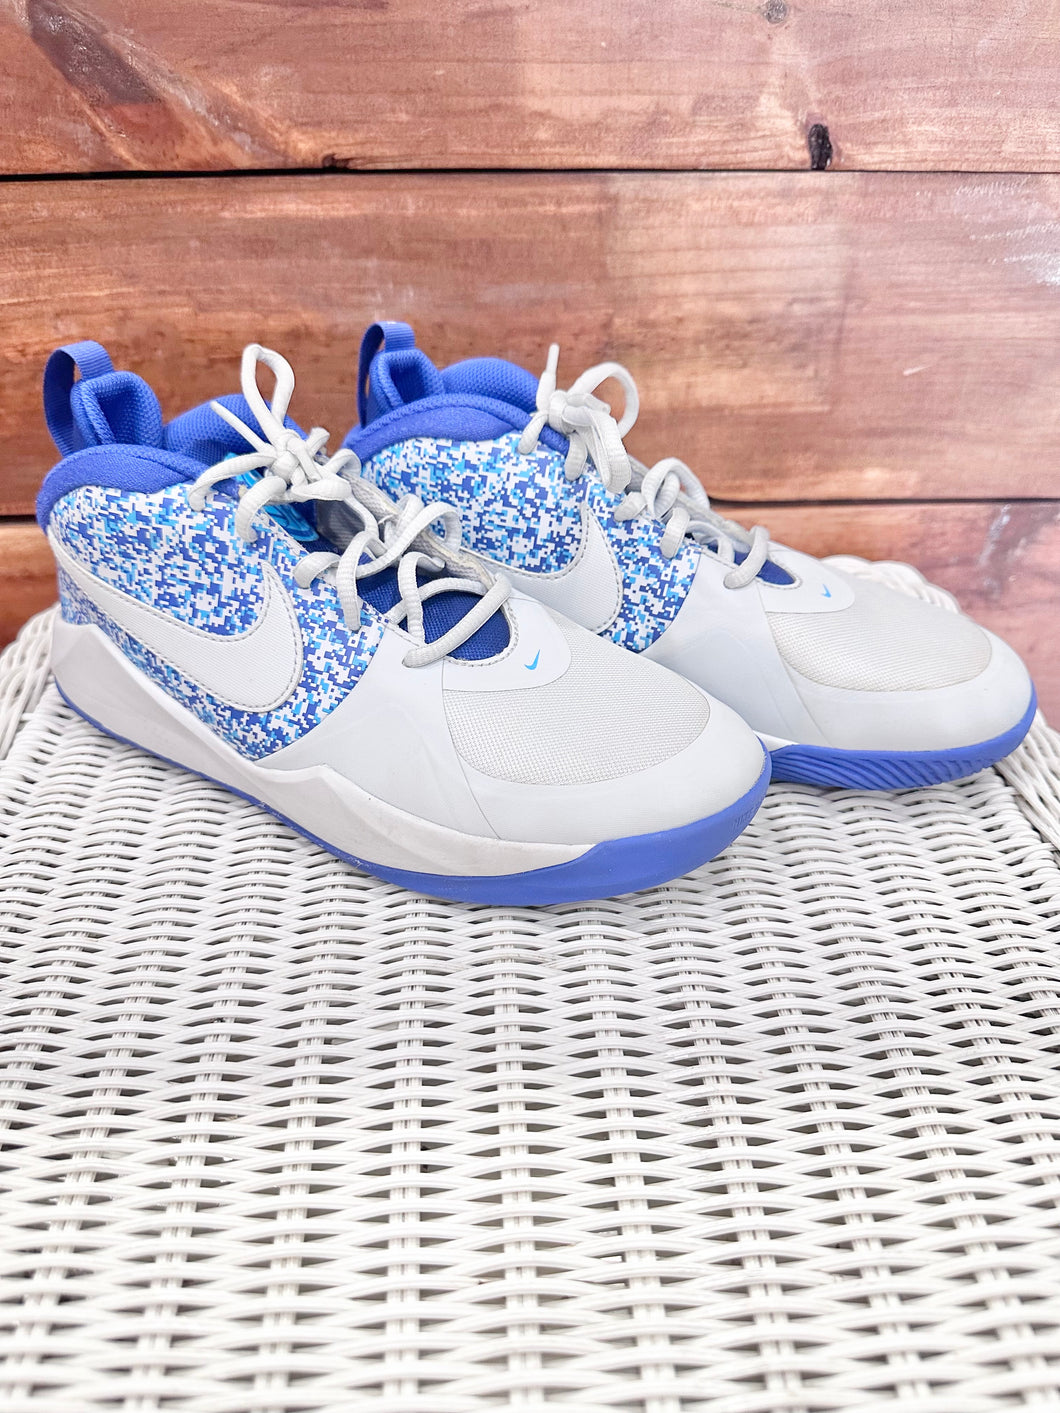 Nike Blue Team Hustle Shoes Size 5.5Y